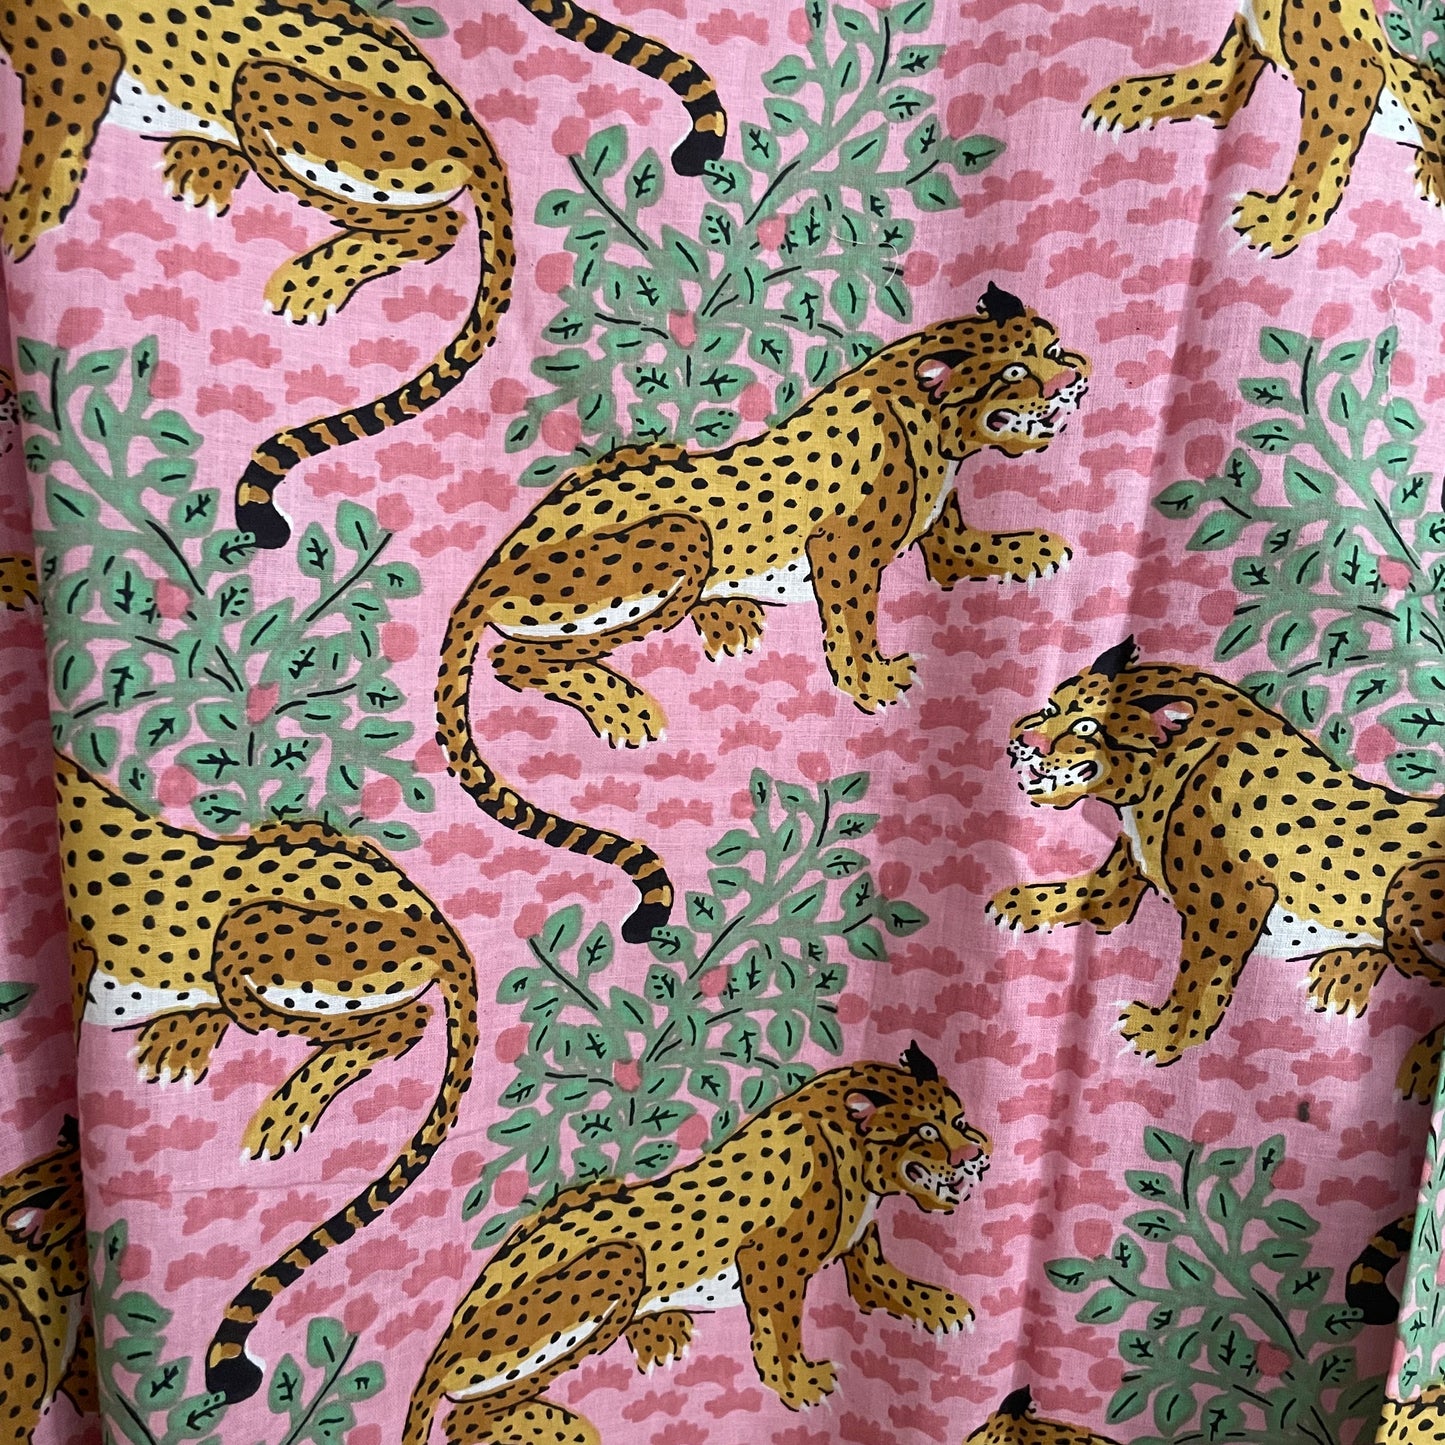 Cotton Kimono - Pink Leopard BACK IN STOCK